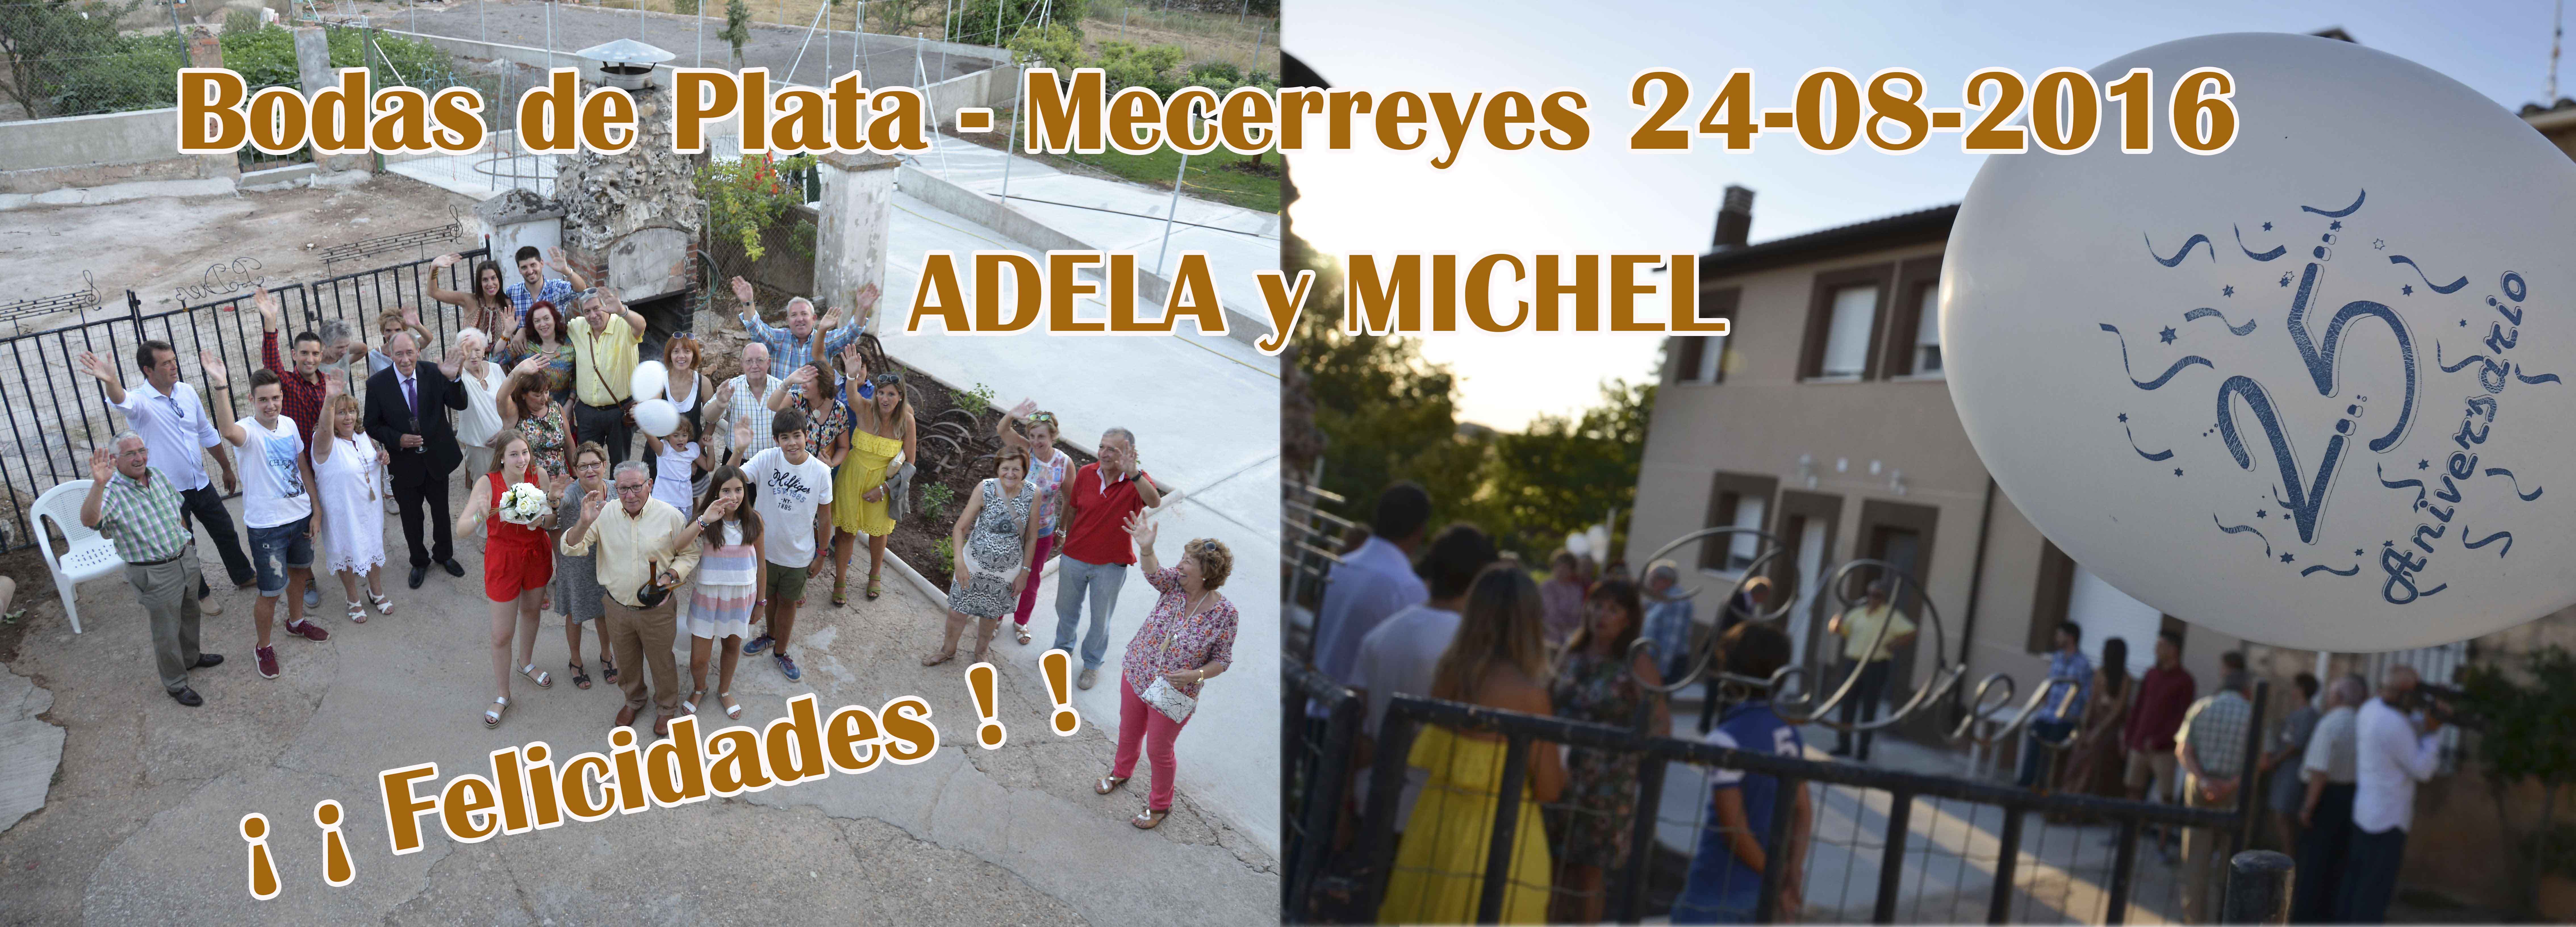 ADELA-MICHEL-2 -Bodas de plata 24-08-16, Mecerreyes